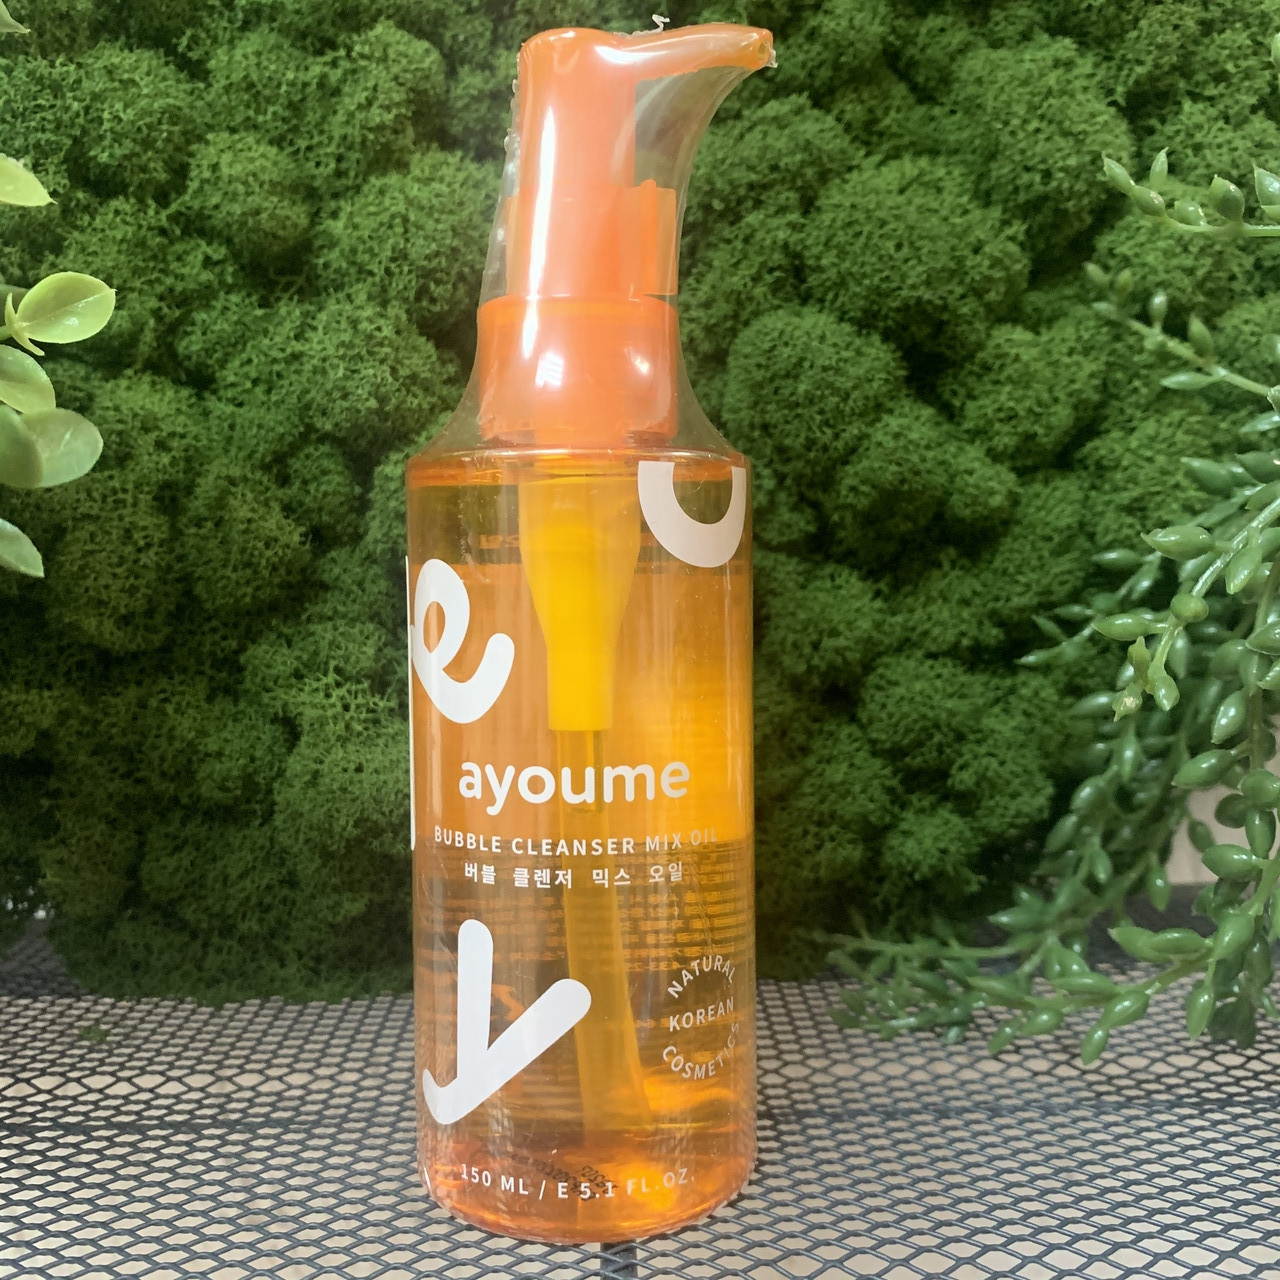 Гидрофильное масло-пенка для снятия макияжа Ayoume Bubble Cleanser Mix Oil, 150 мл.